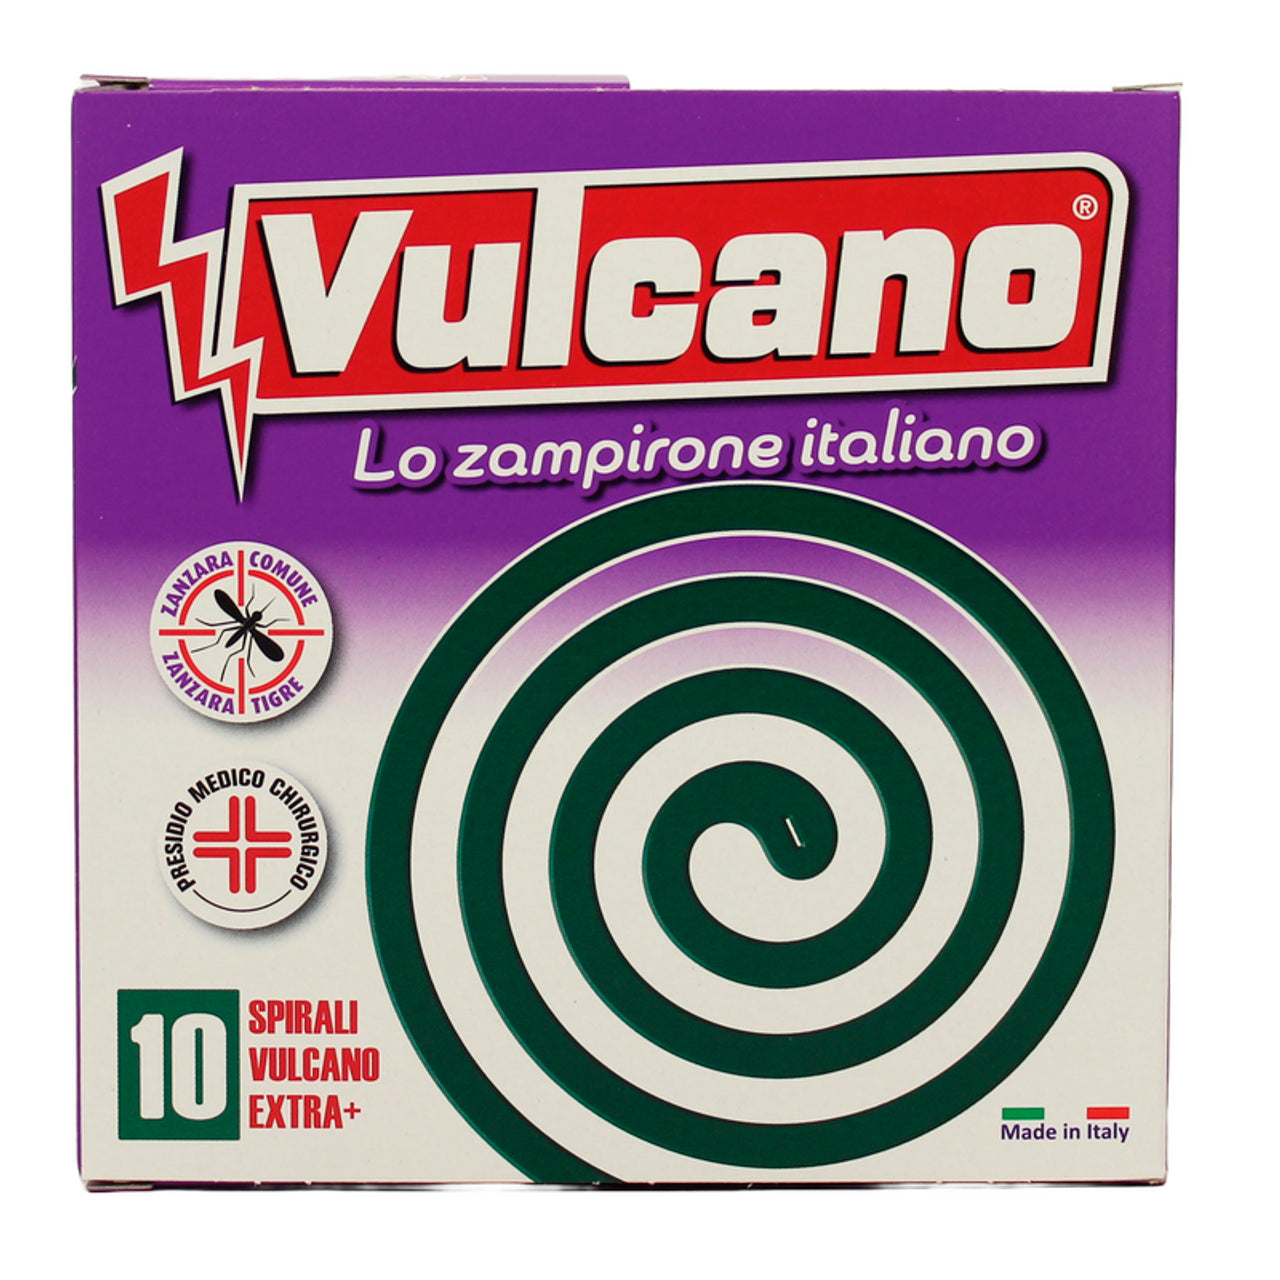 Vulcano Spirali 10 PCS.classic mot myggor och Pappataci